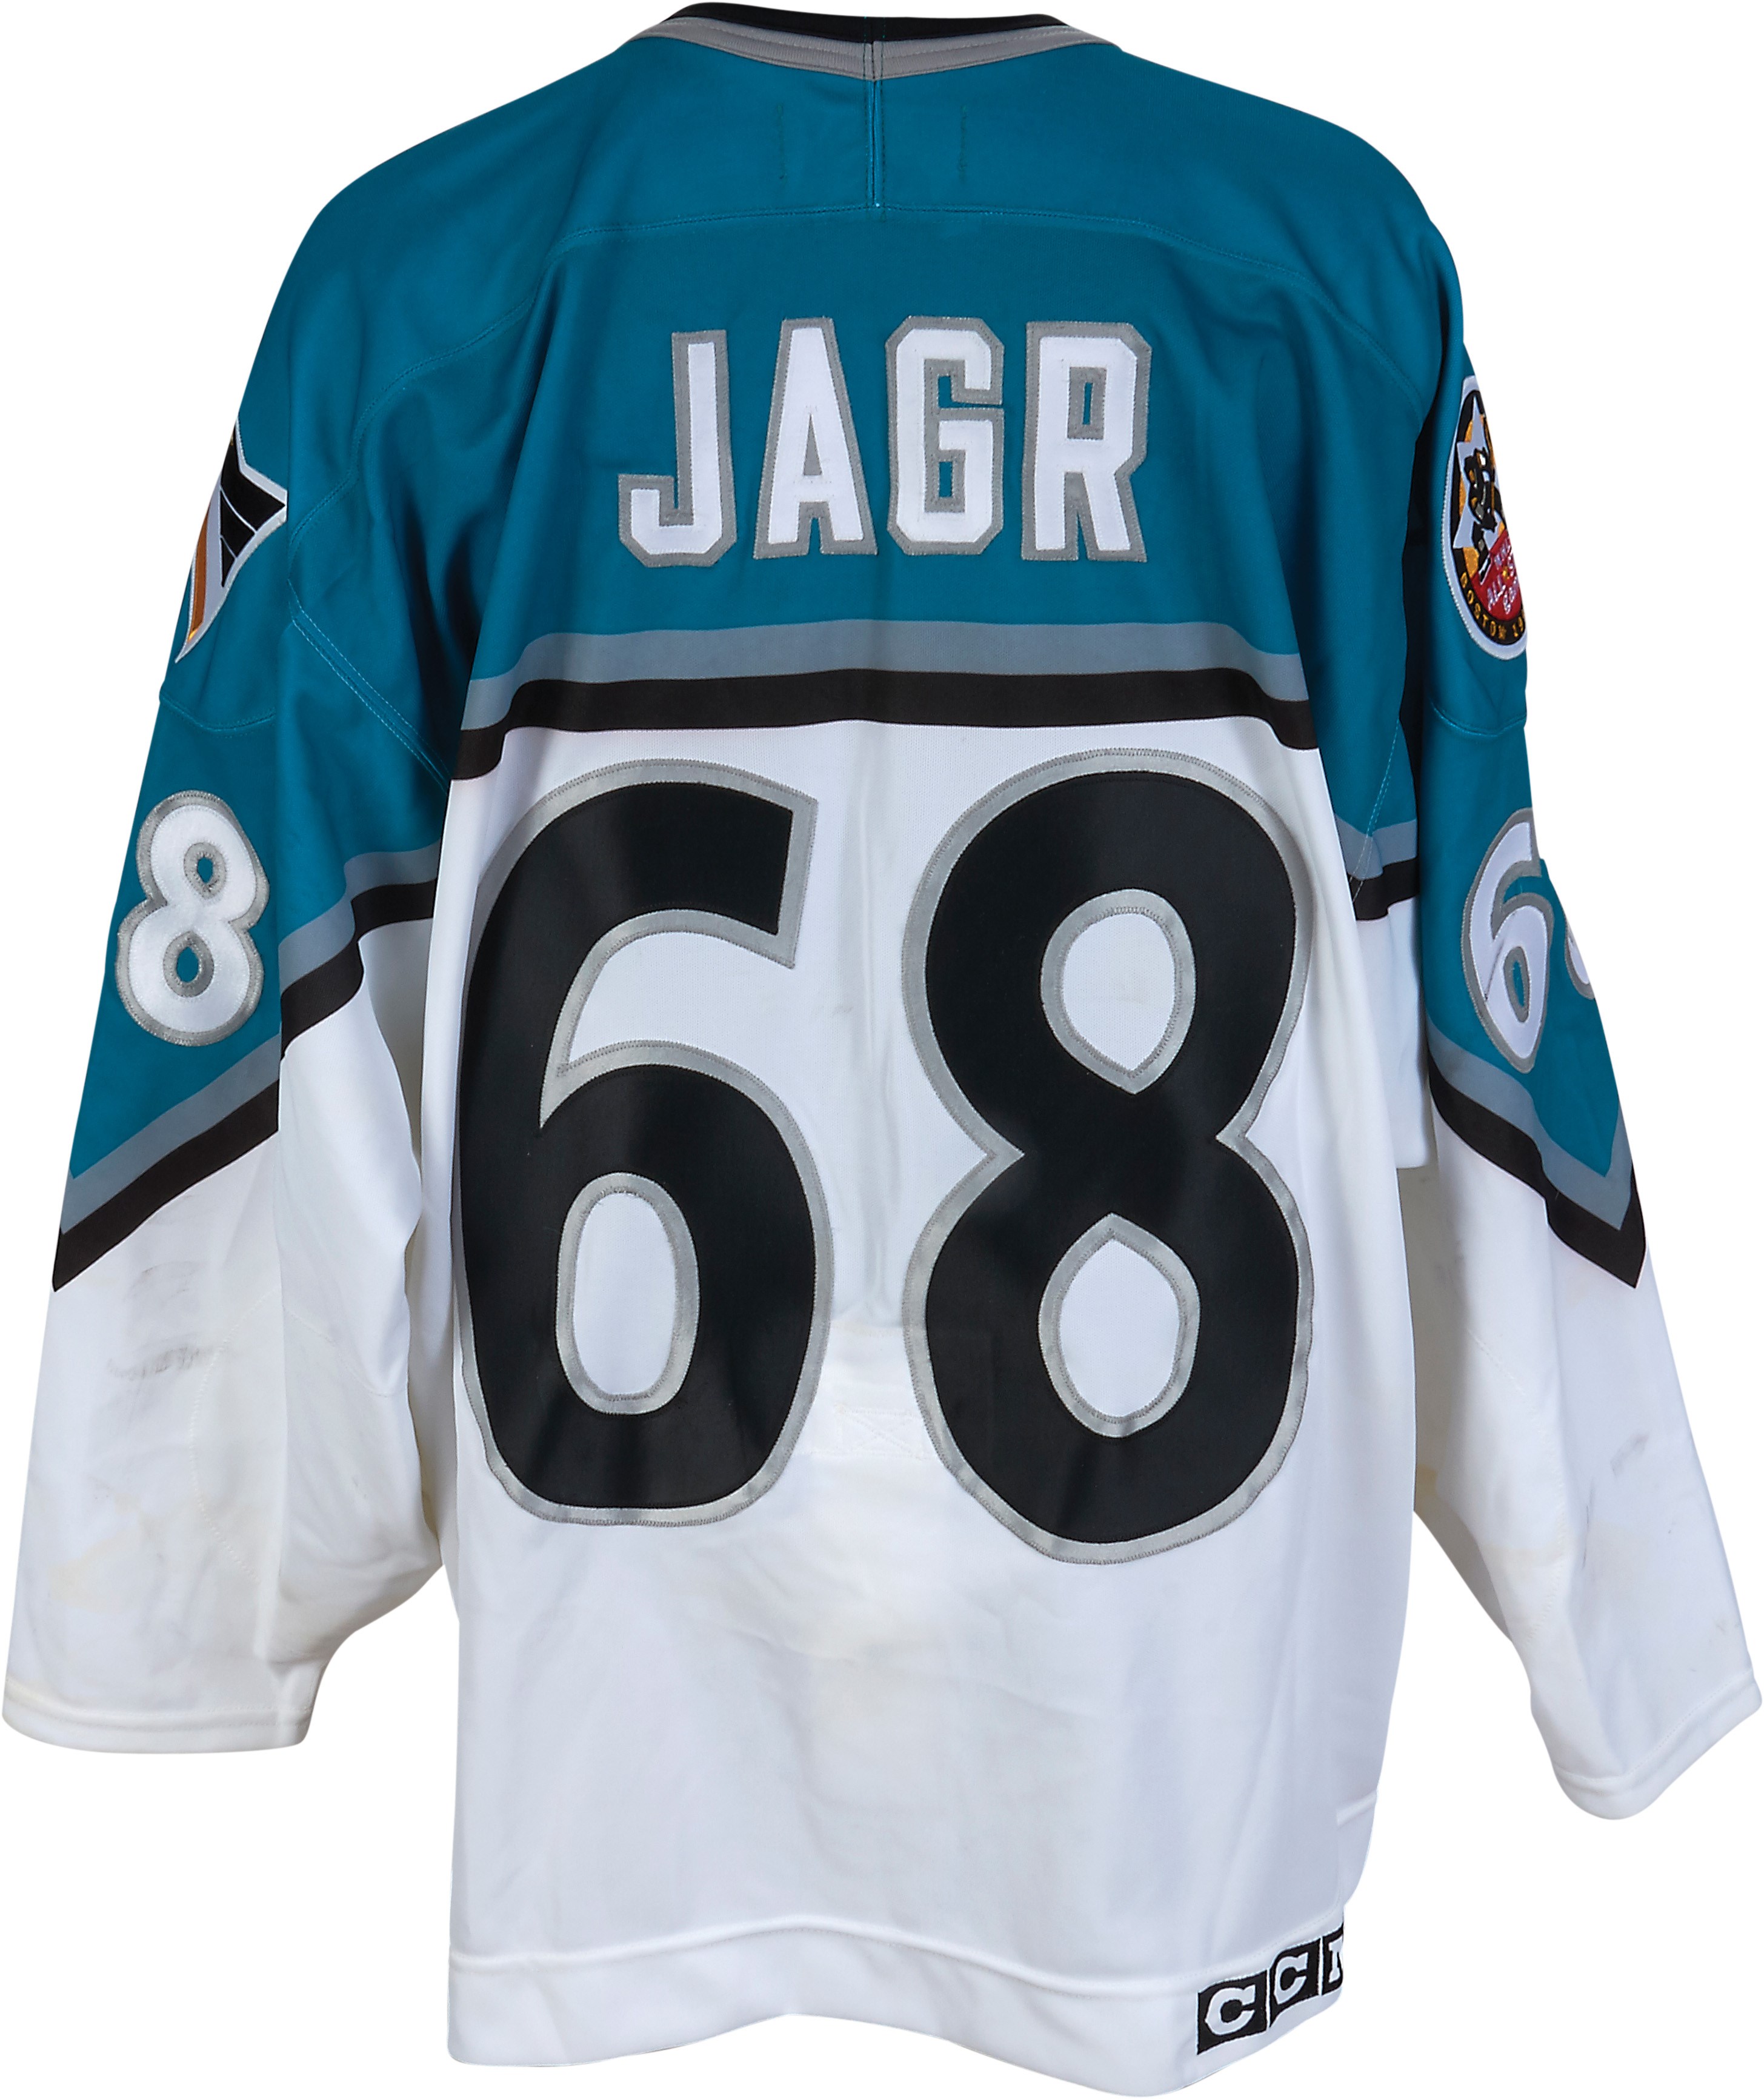 - 1996 Jaromir Jagr NHL All-Star Game Worn Jersey (Photo-Matched)